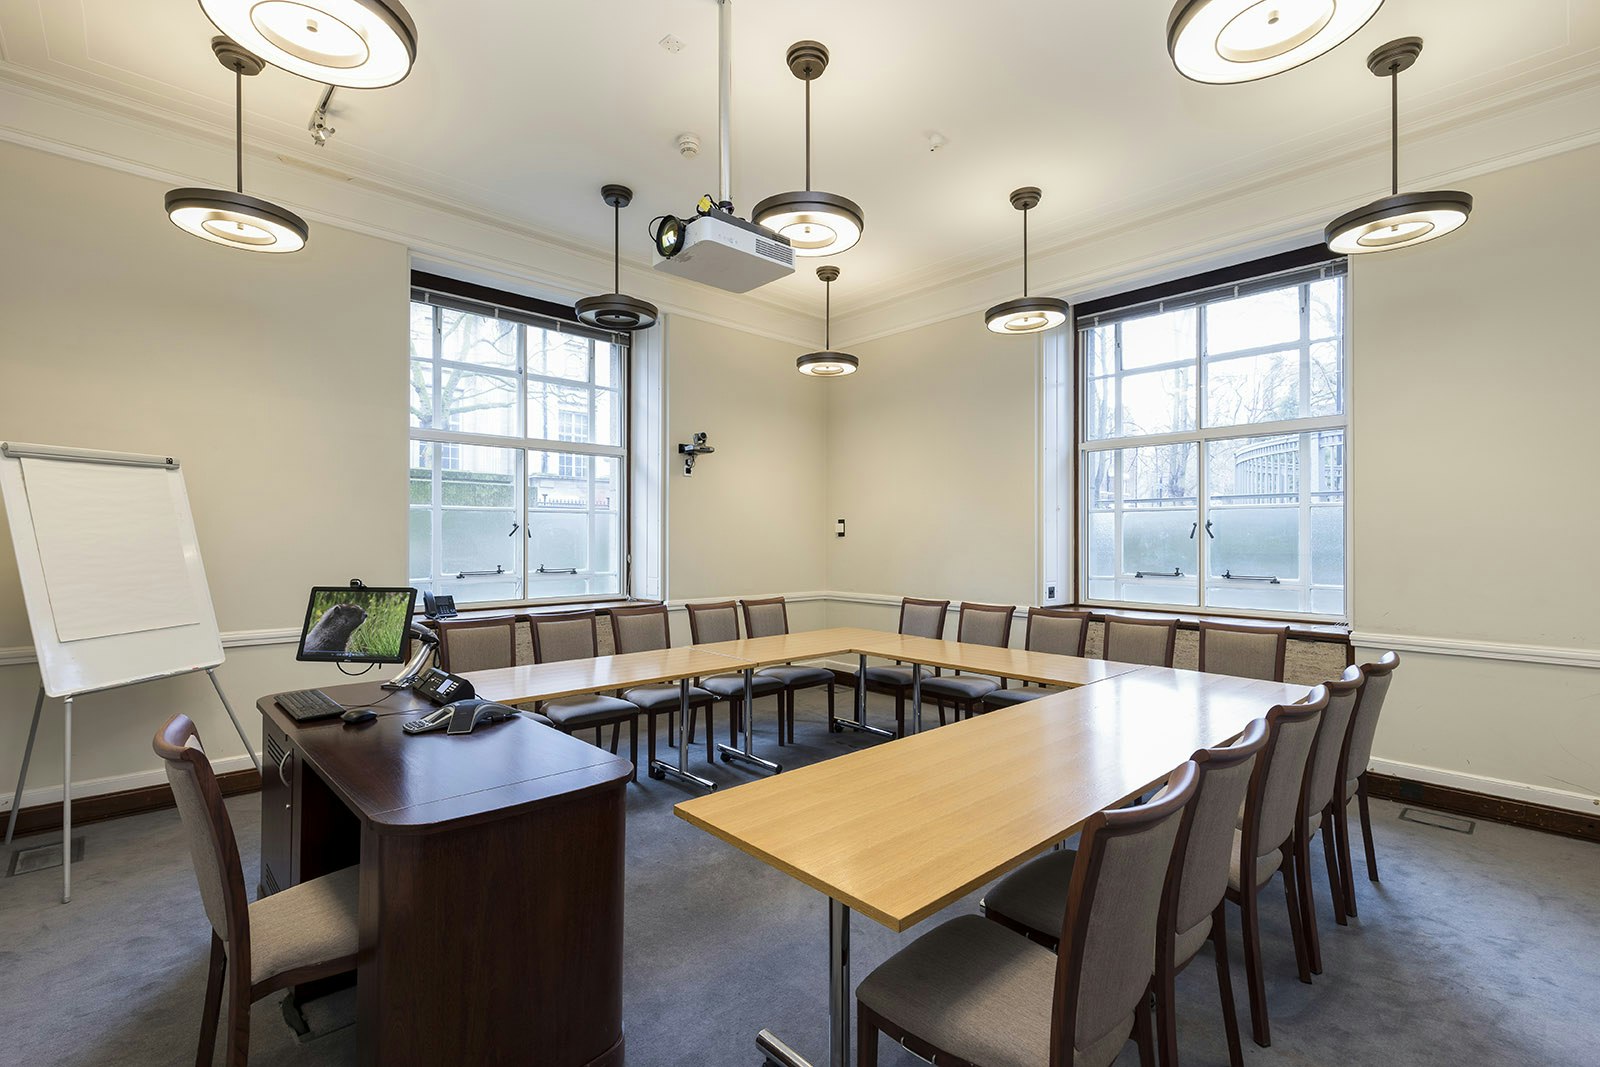 University of London Venues - Meeting Rooms - Senate House image 3